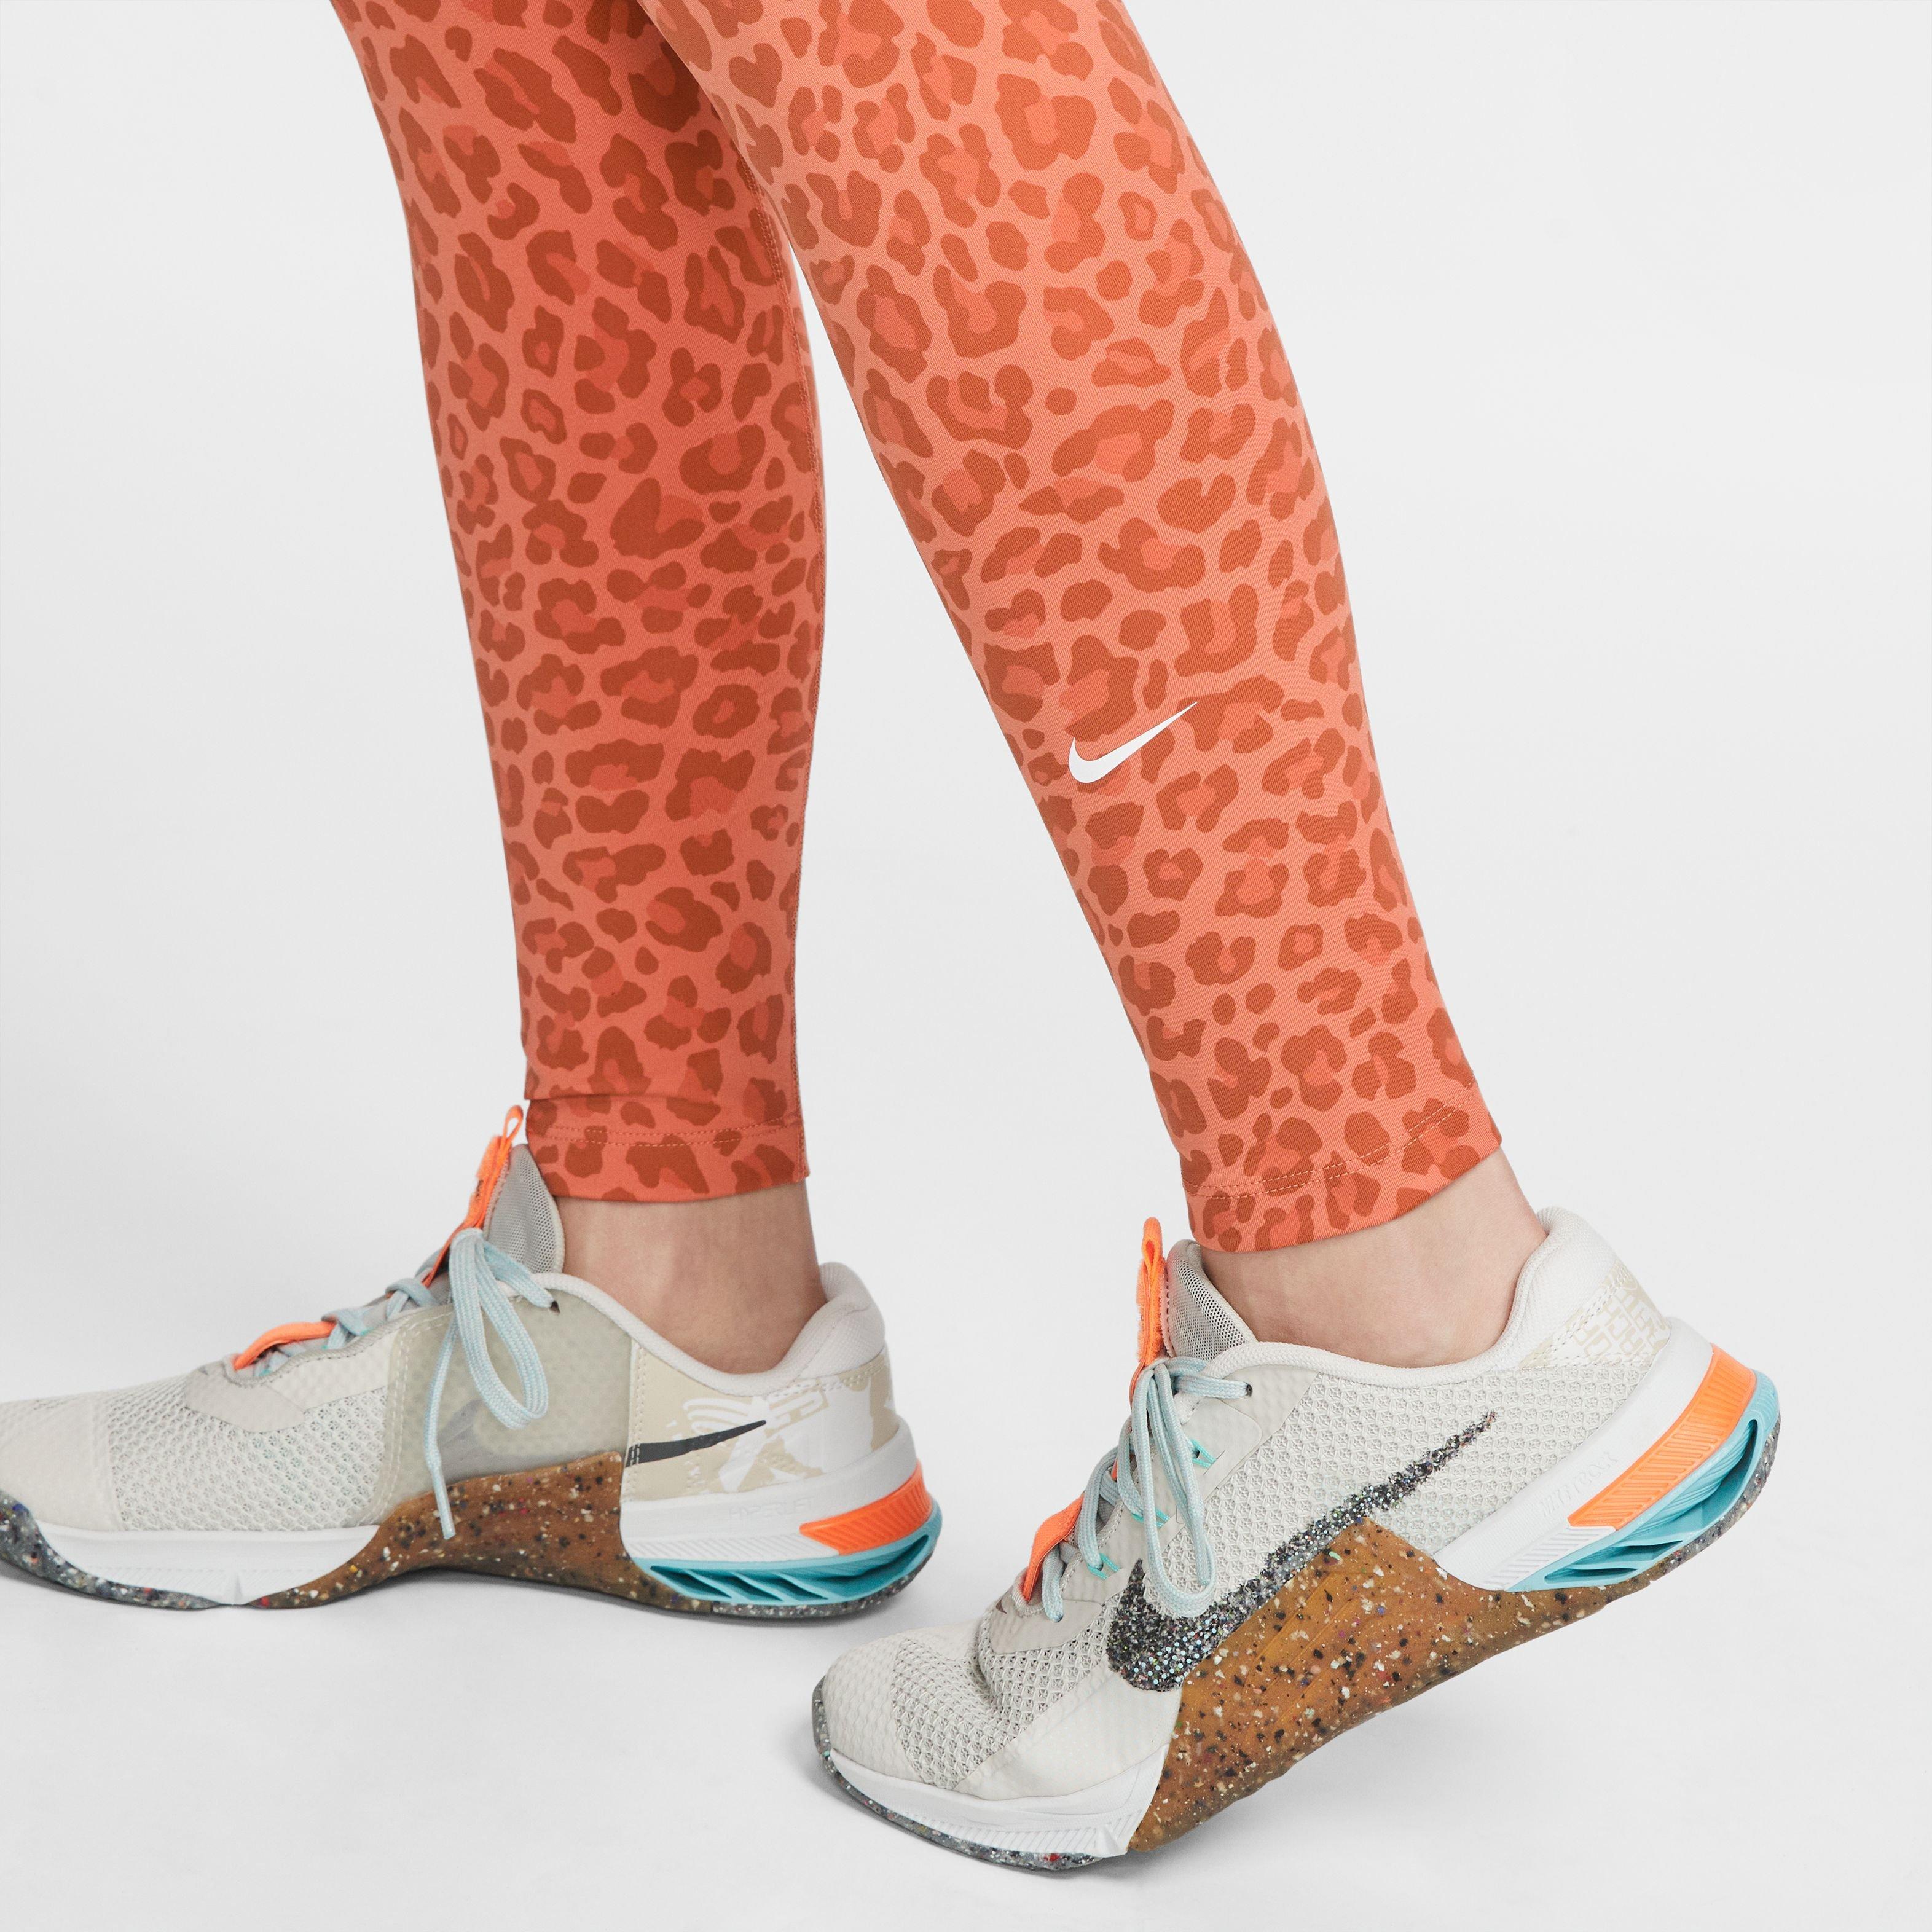 Nike One Dri-FIT Women's High-Rise All Over Print Leopard Leggings